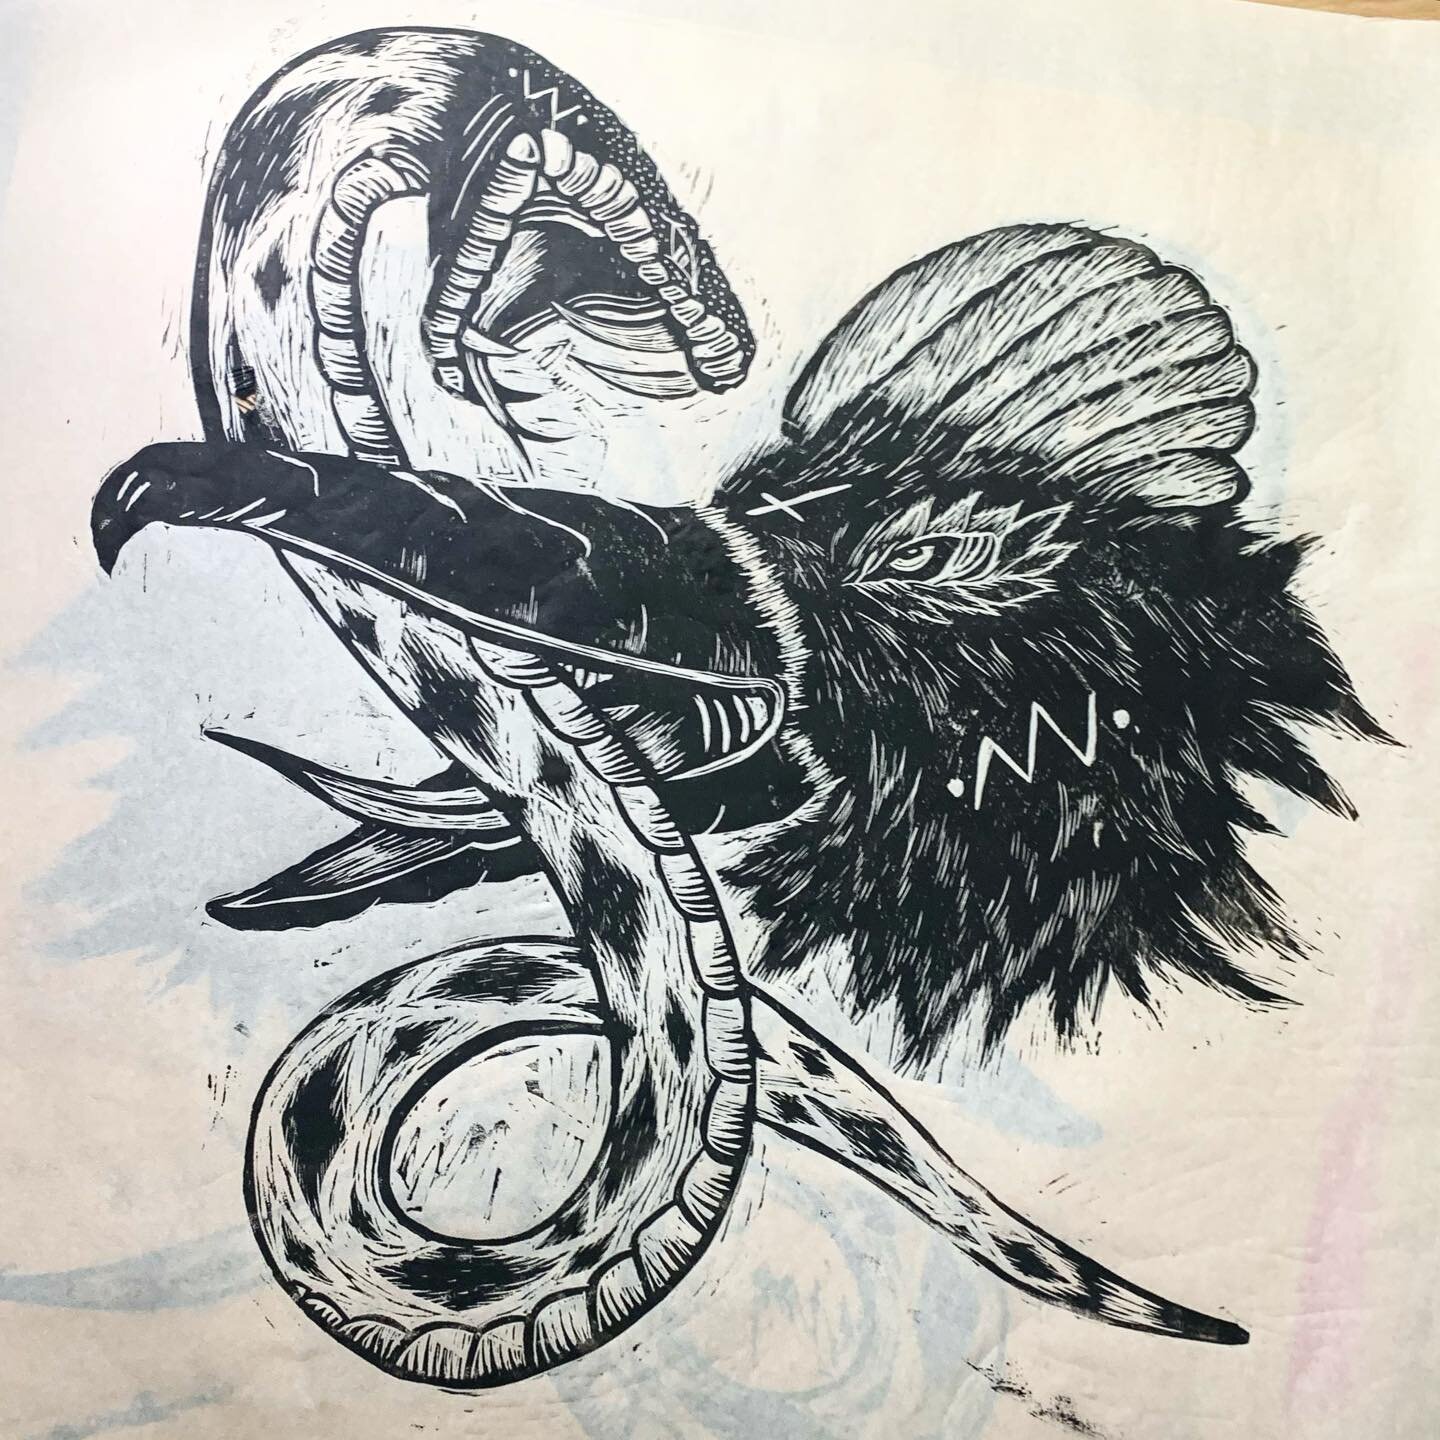 Getting a test print done.
-
-
-
-
-
#printmaking #reliefprint #reliefprintmaking #snake #illustration  #art #blackandwhite #blackandwhiteartworking #homeprinting #linocut #lino #linocutprint #printmaker #printmakersofinstagram #tattoo #dark #bird #c